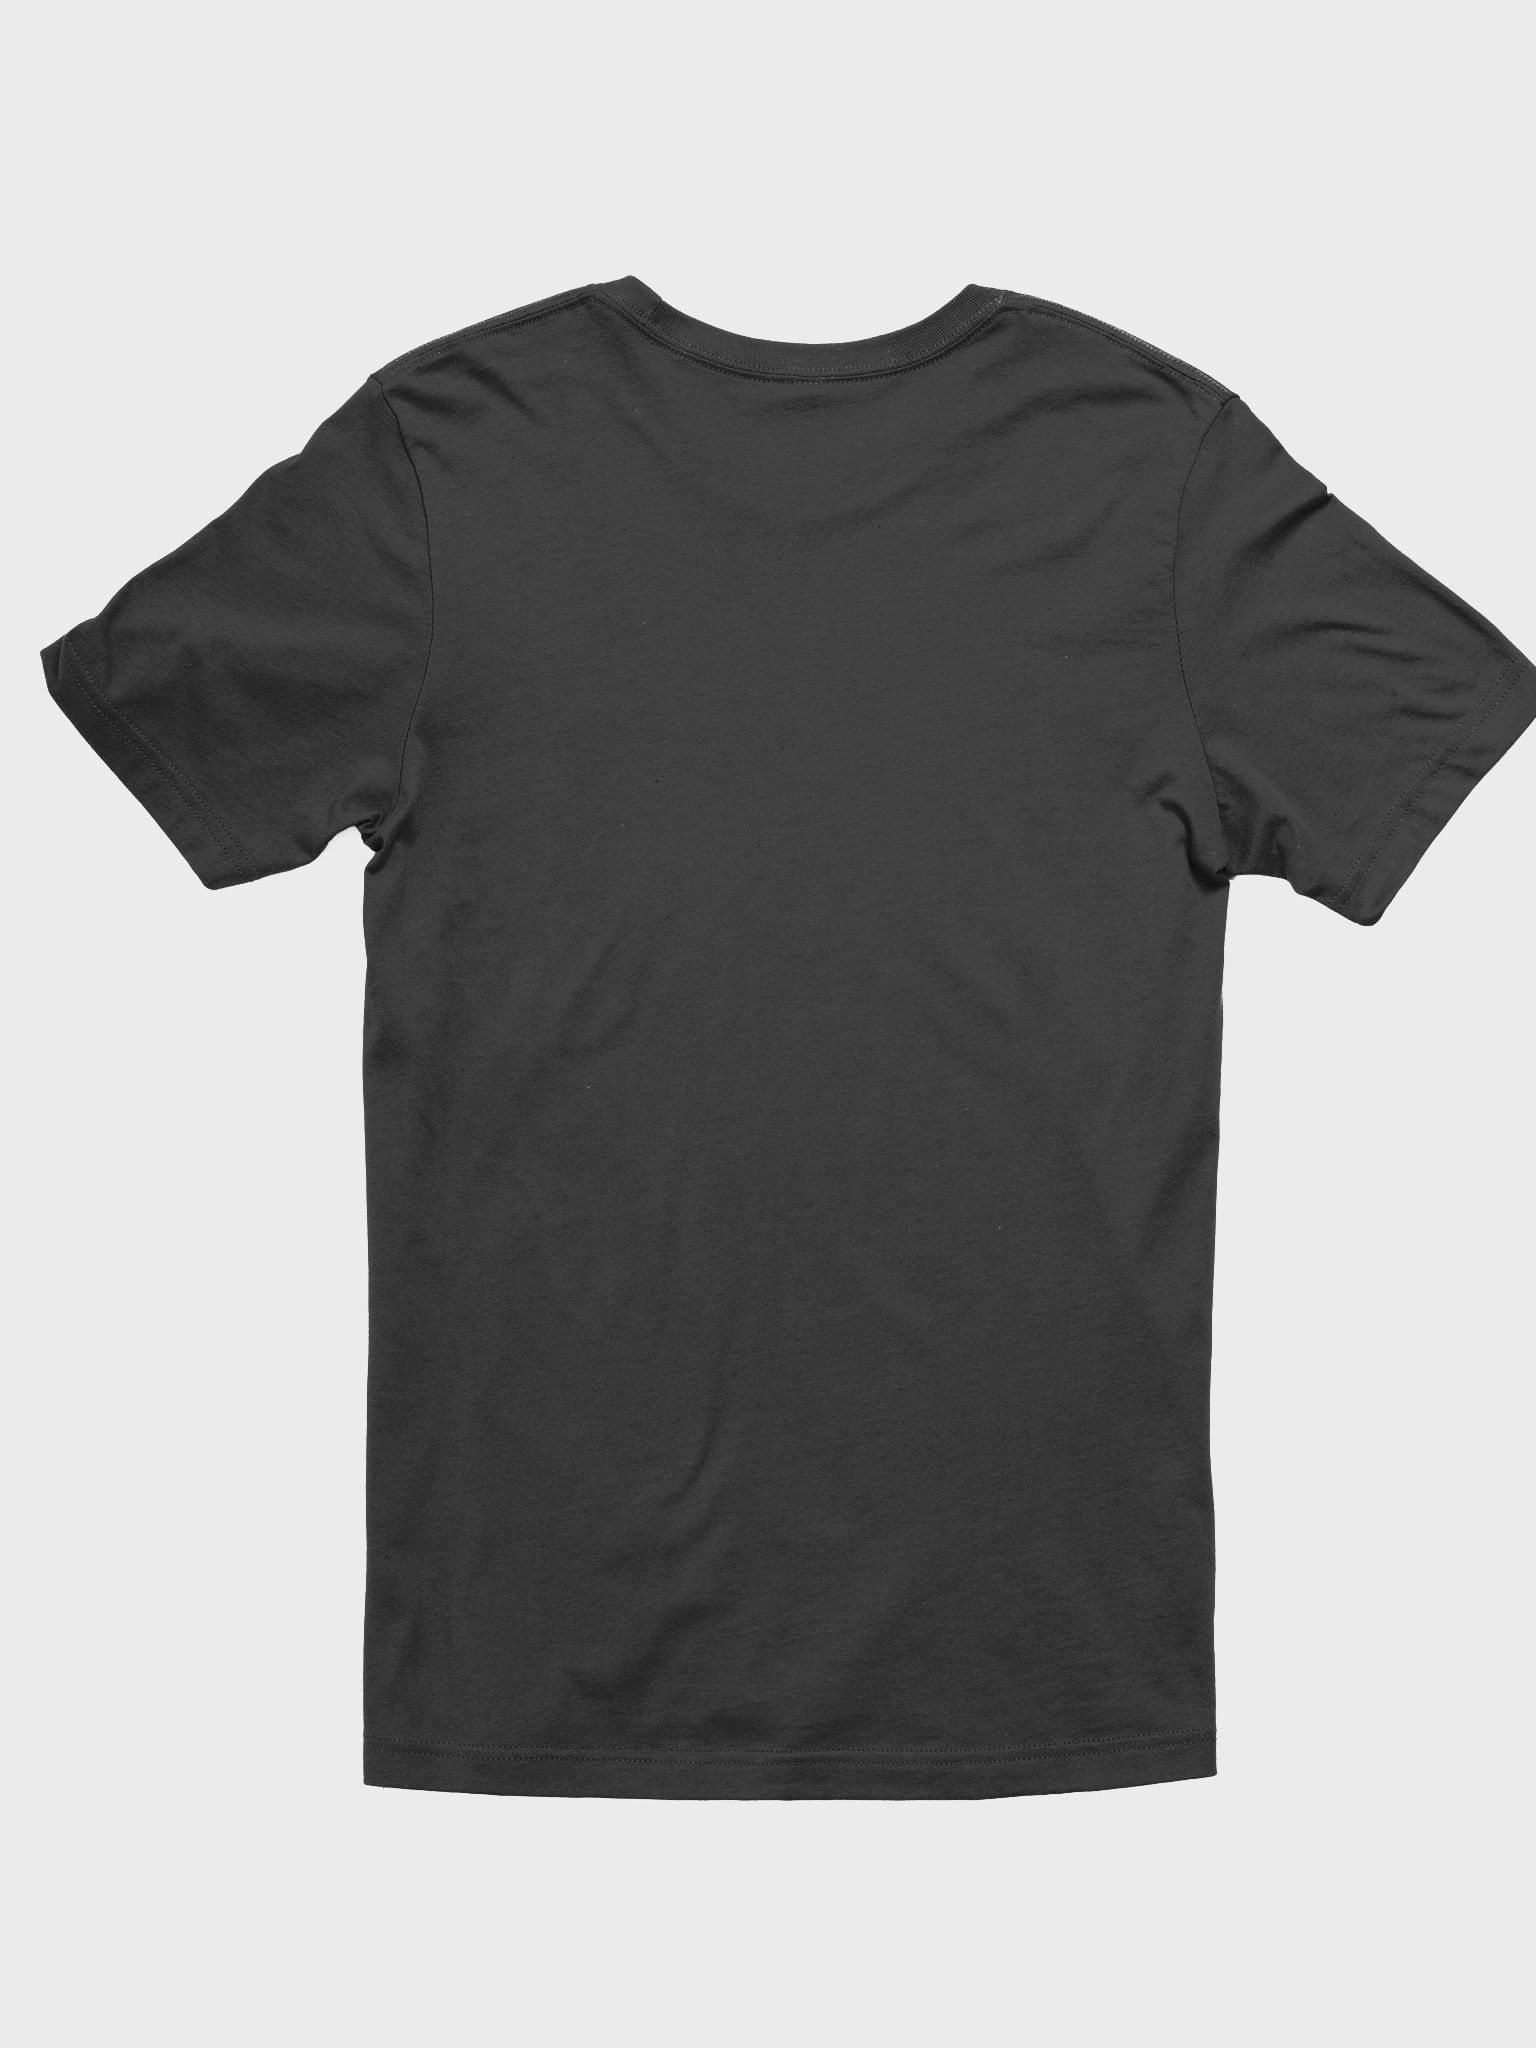 VGO AI Overlord (Filled Head) T-Shirt